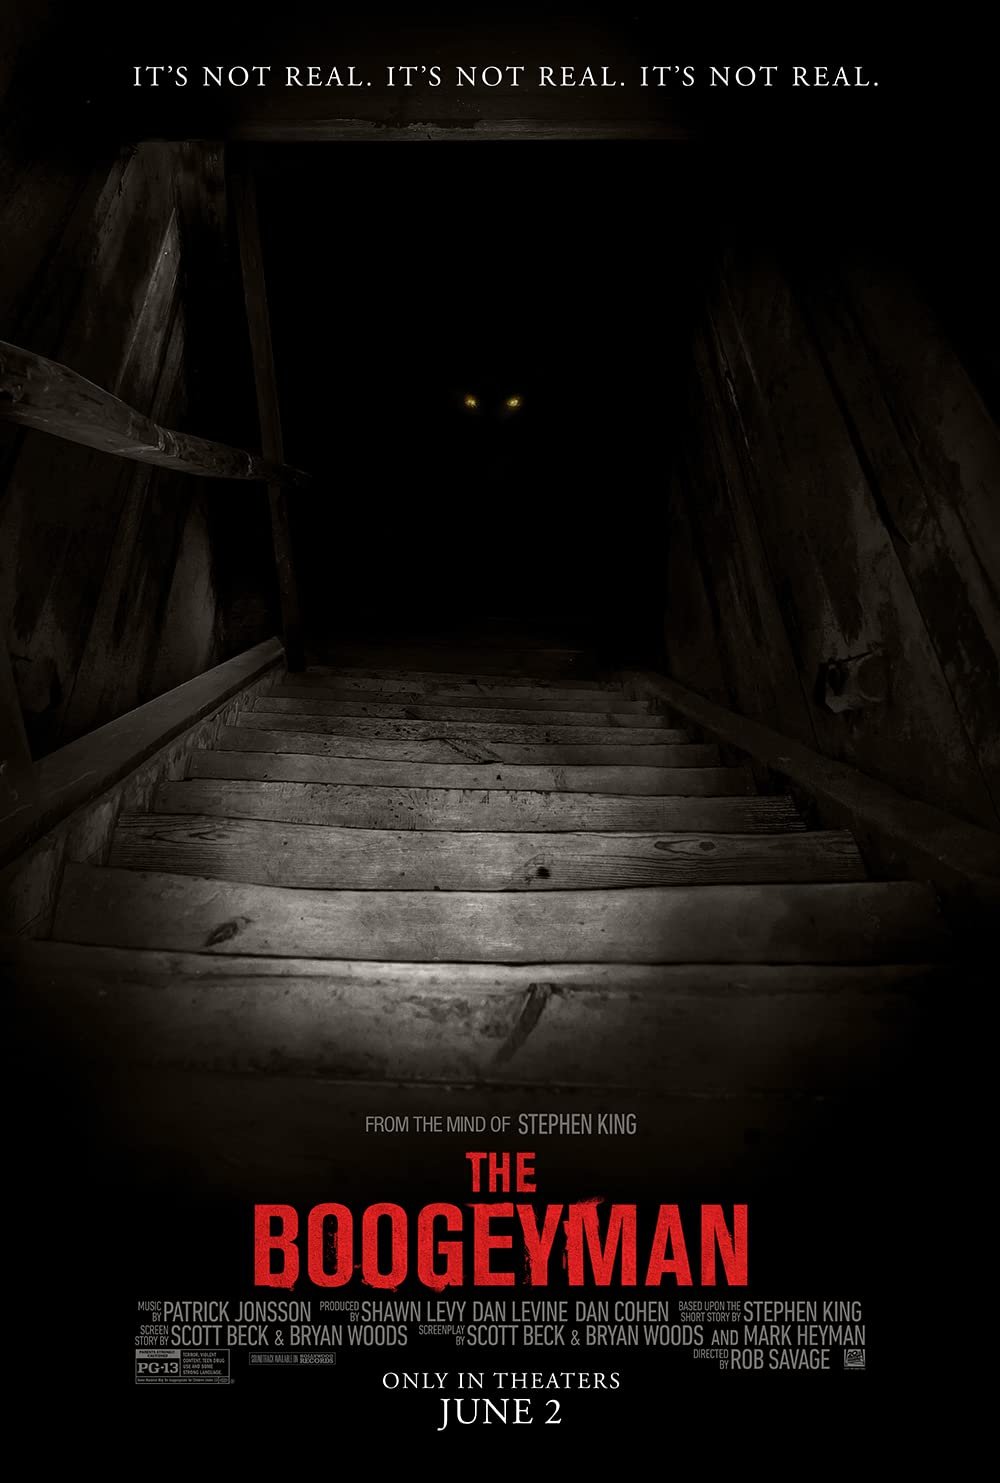 The Boogeyman image © 20th Century Studios